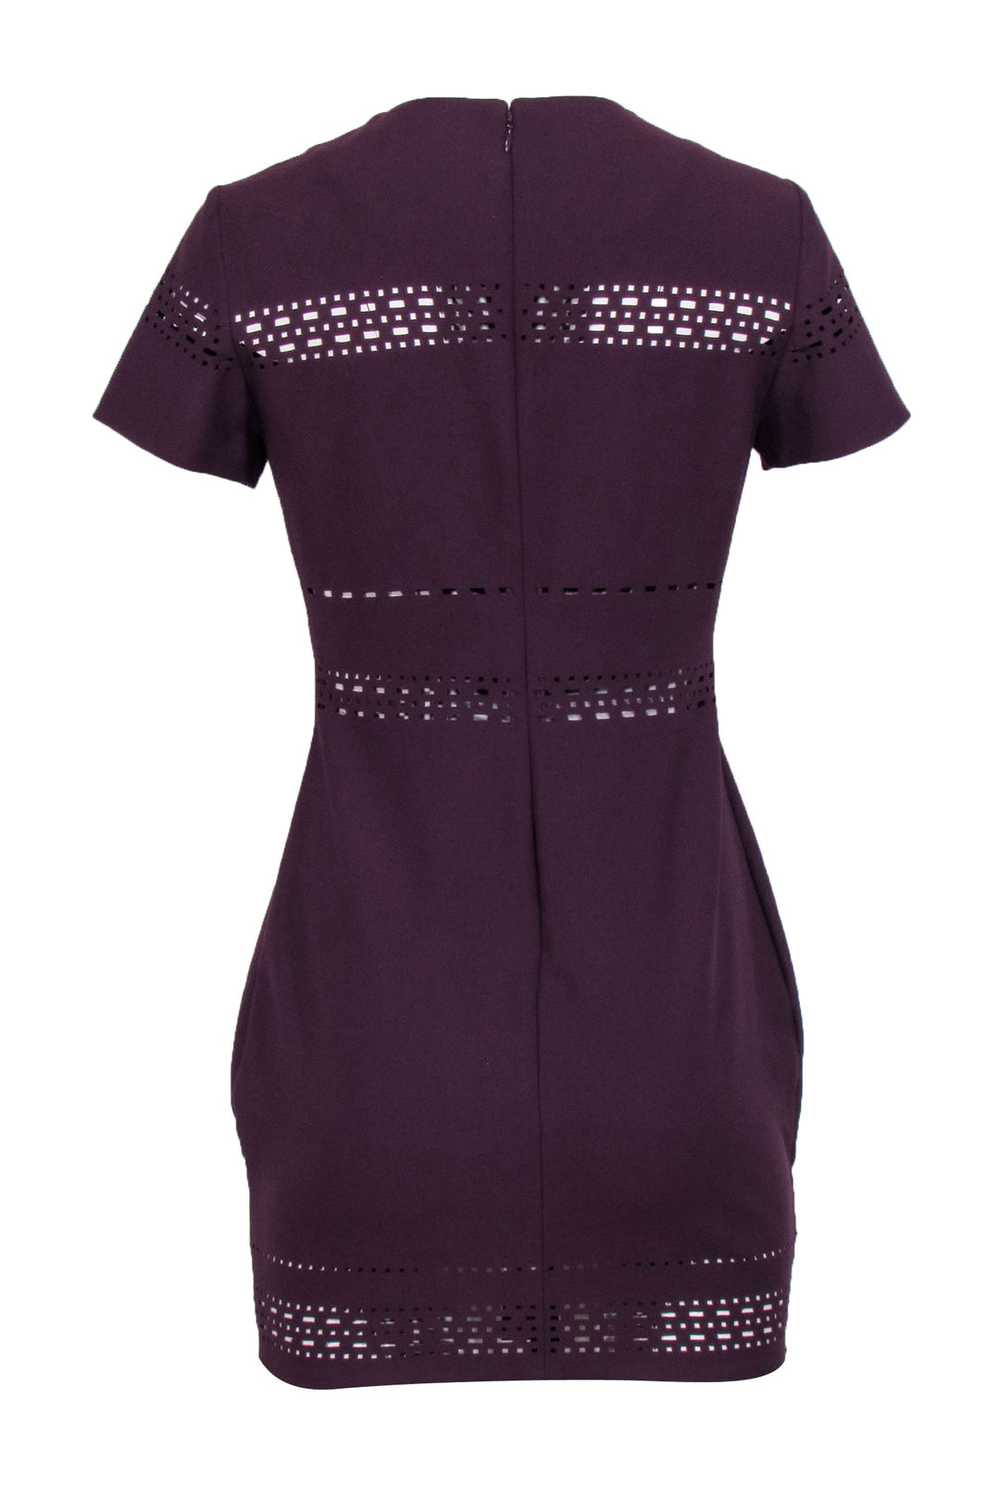 Elizabeth & James - Plum Purple “Ari” Dress w/ La… - image 3